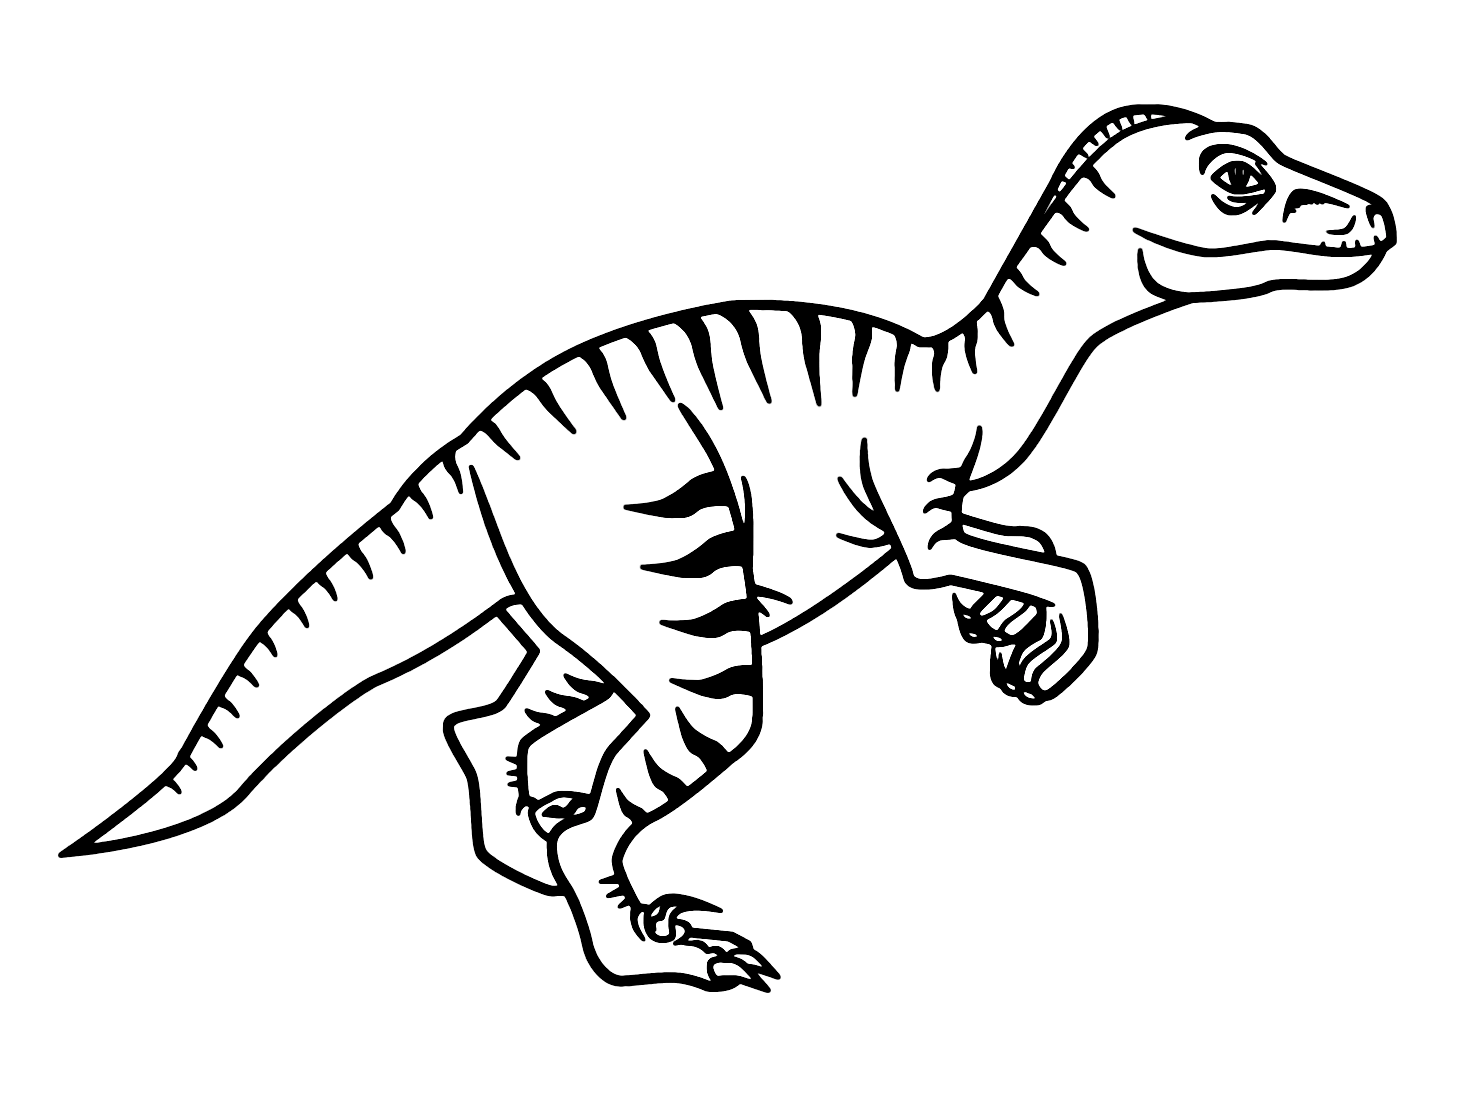 Dinosaurio Velociraptor 1 de Velociraptor